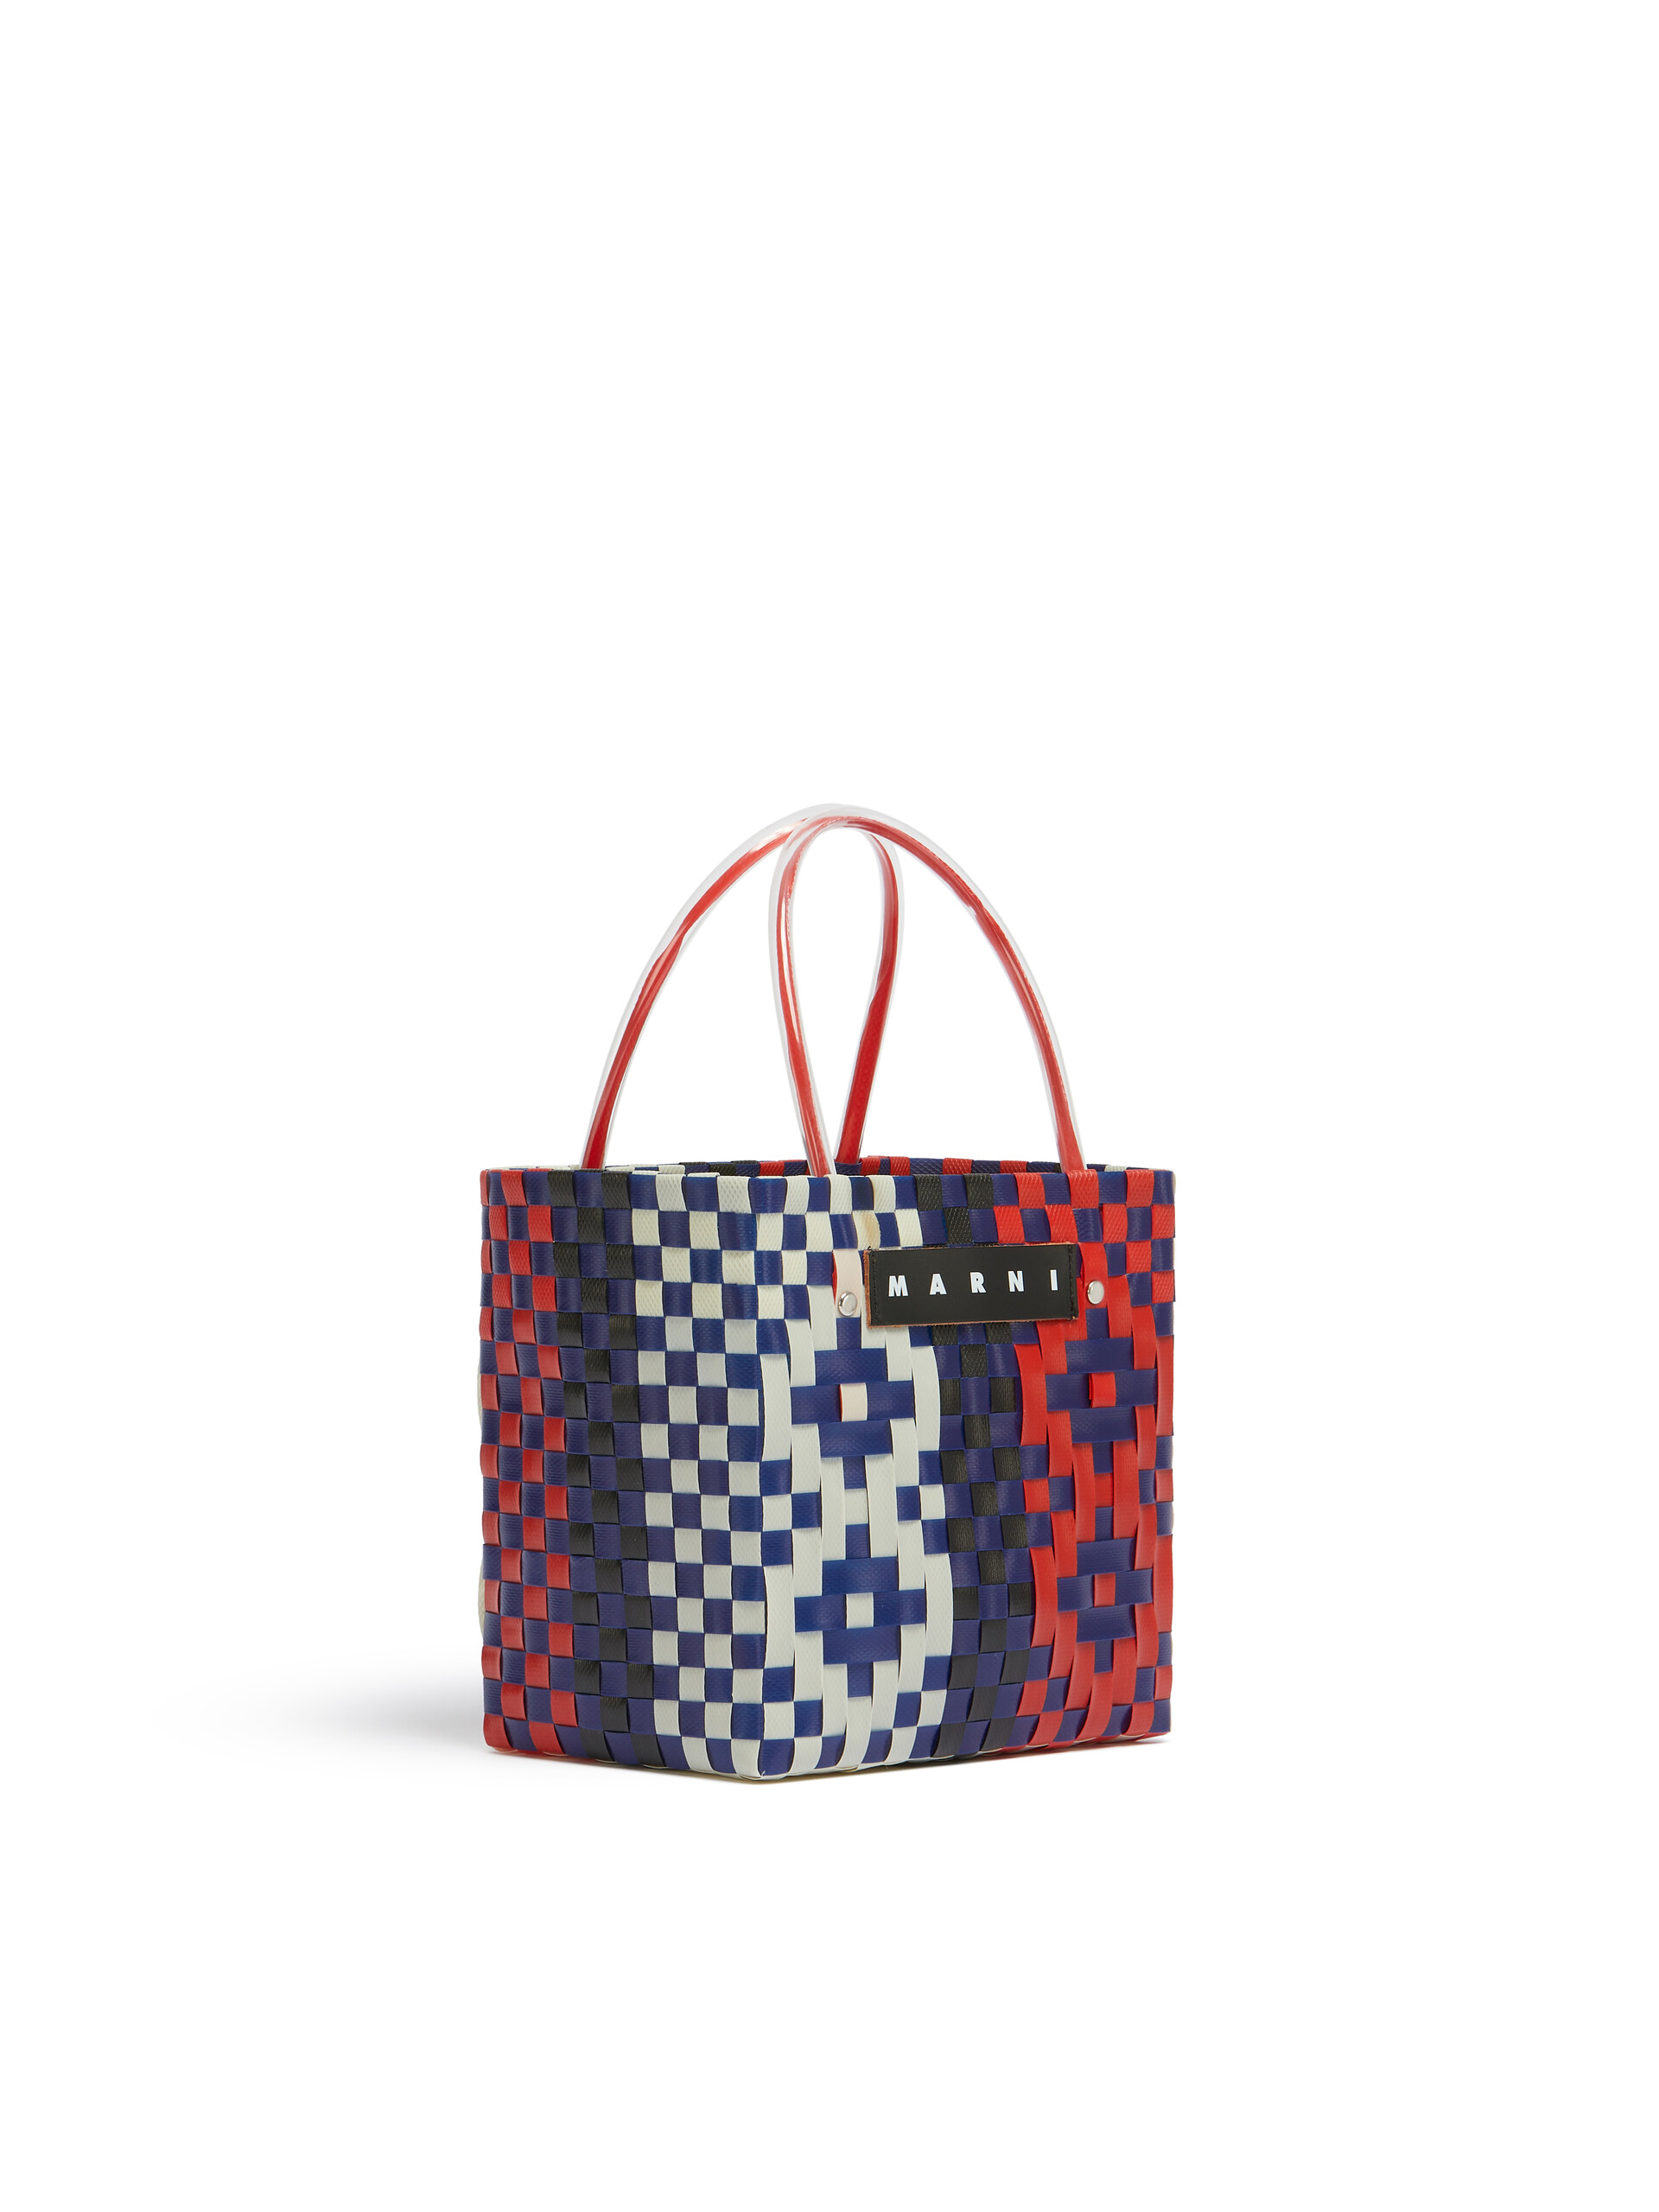 Red rhombus MARNI MARKET MINI BASKET bag - Shopping Bags - Image 2